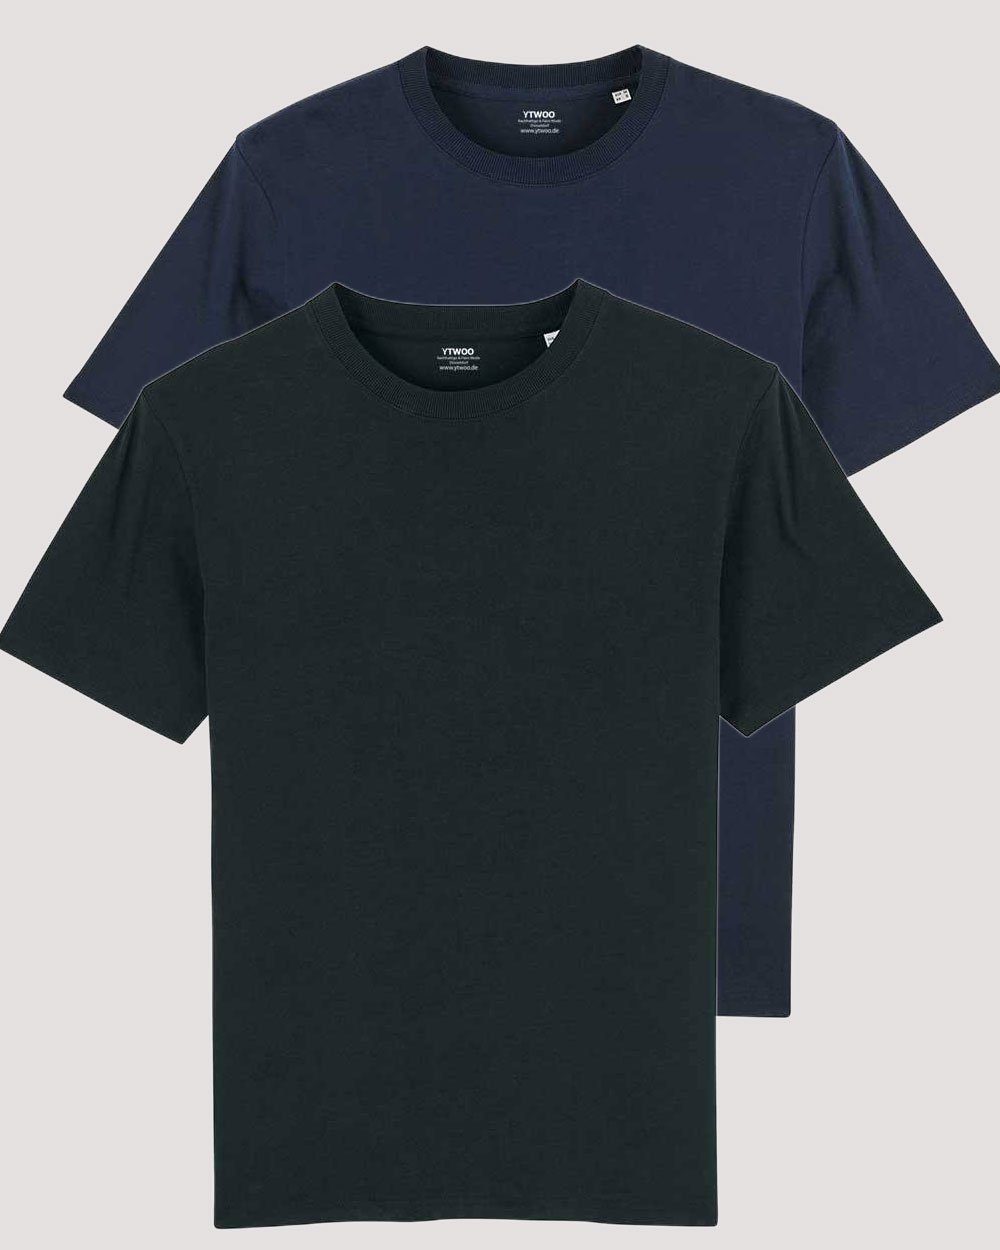 YTWOO T-Shirt 2er Pack, Männer Farbkombinationen Basic, schwere (2-tlg) Zwei T-Shirt 220g/m², Bio-Baumwolle